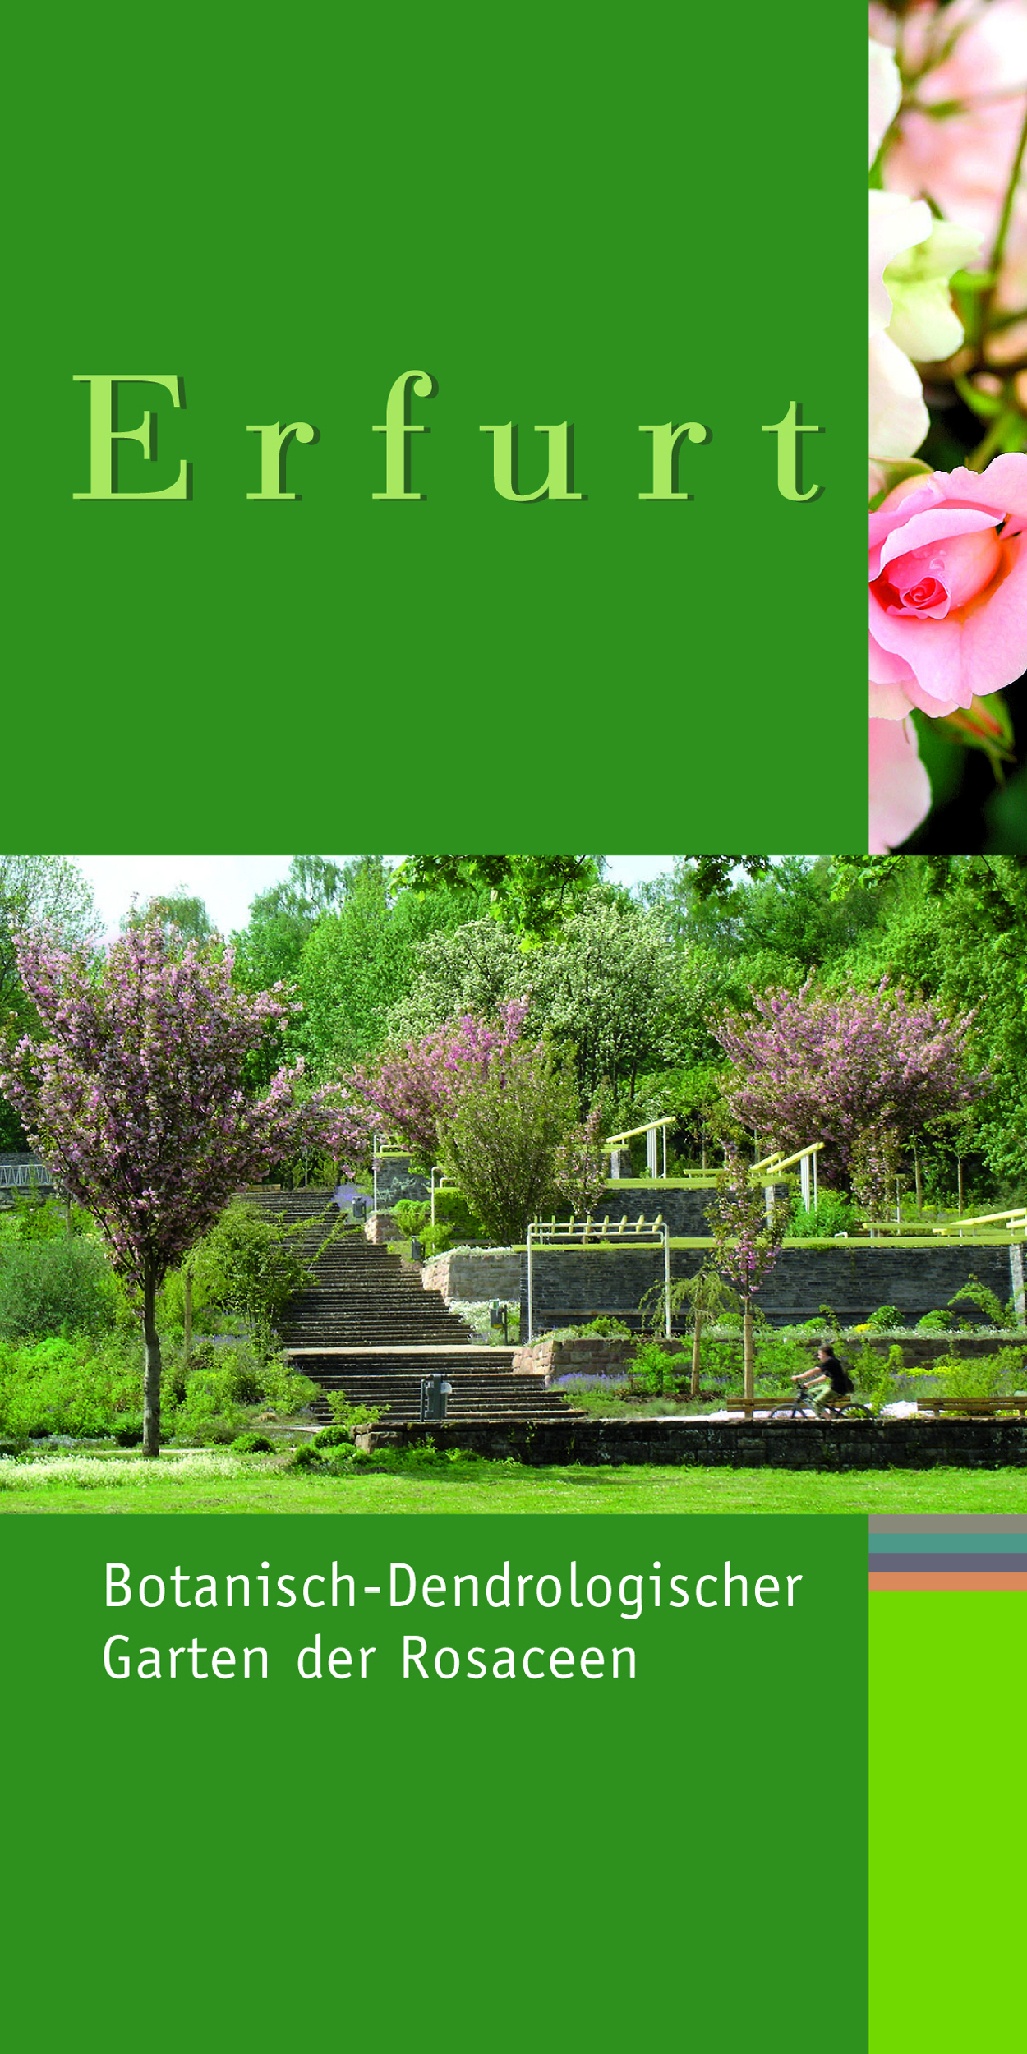 „Erfurts grüne Reihe“, Botanisch-Dendrologischer Garten der Rosaceen, Bild: Dr. Rüdiger Kirsten, Garten- und Friedhofsamt Erfurt